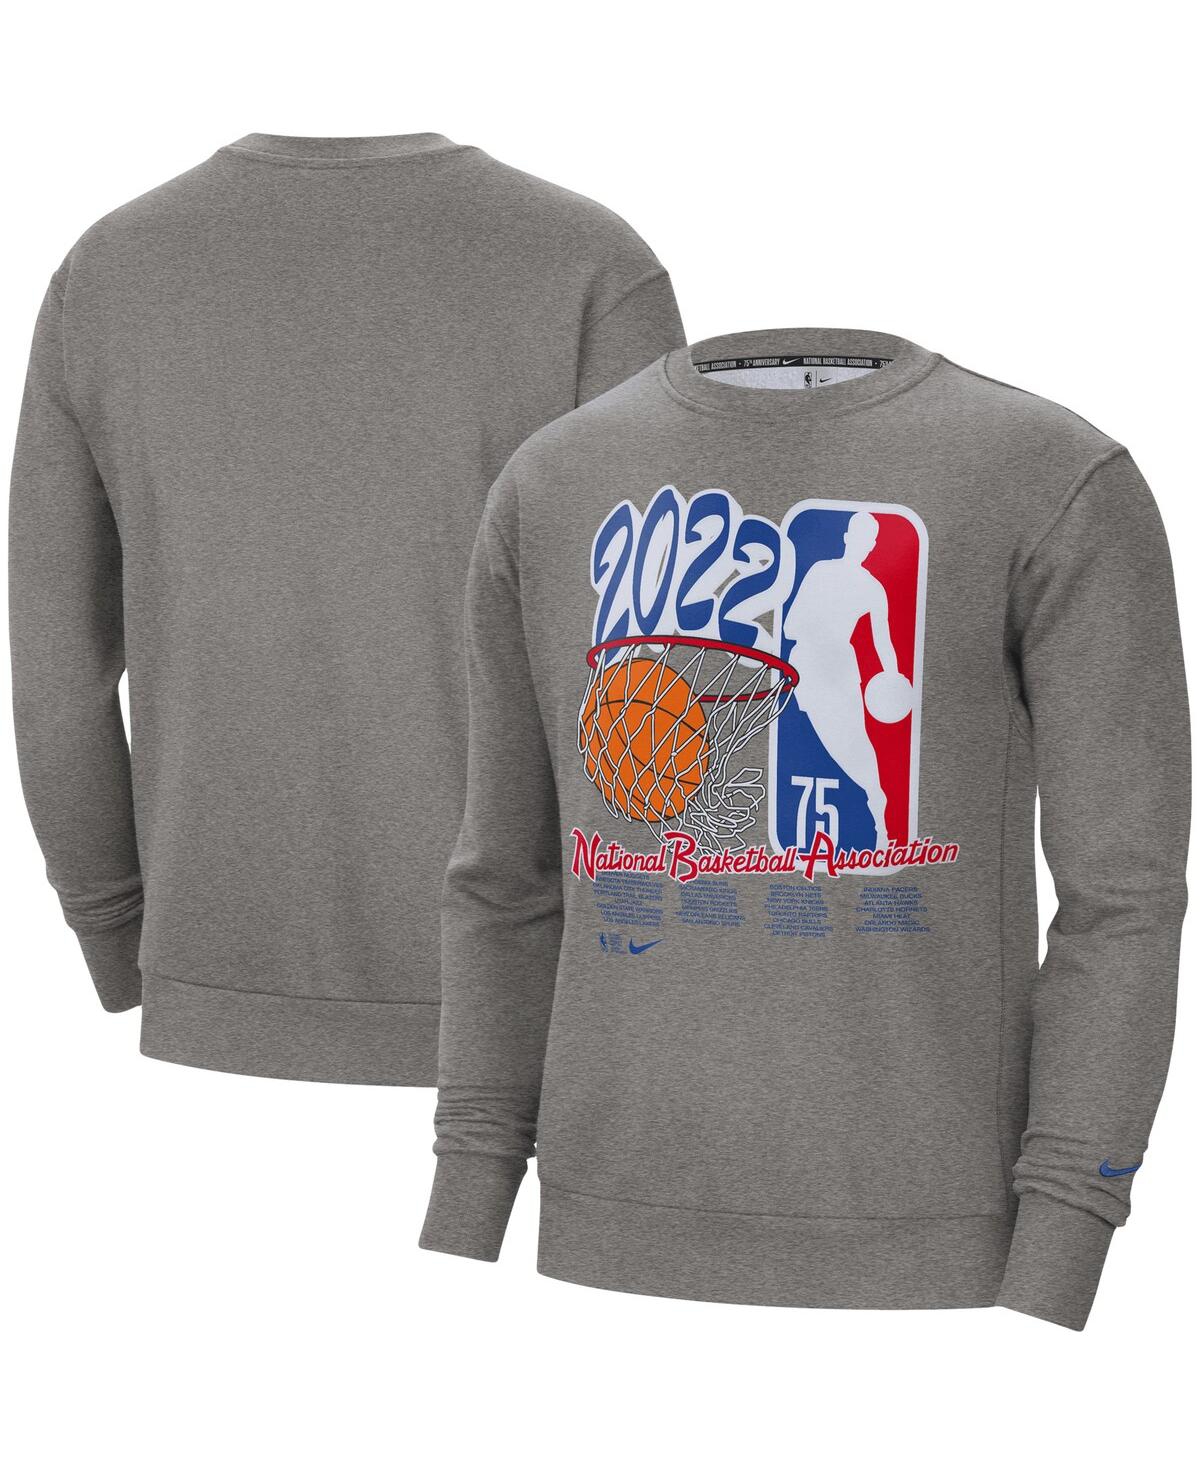 Shop Nike Men's  Heathered Gray Team 31 Nba 75th Anniversary Fleece Sweatshirt